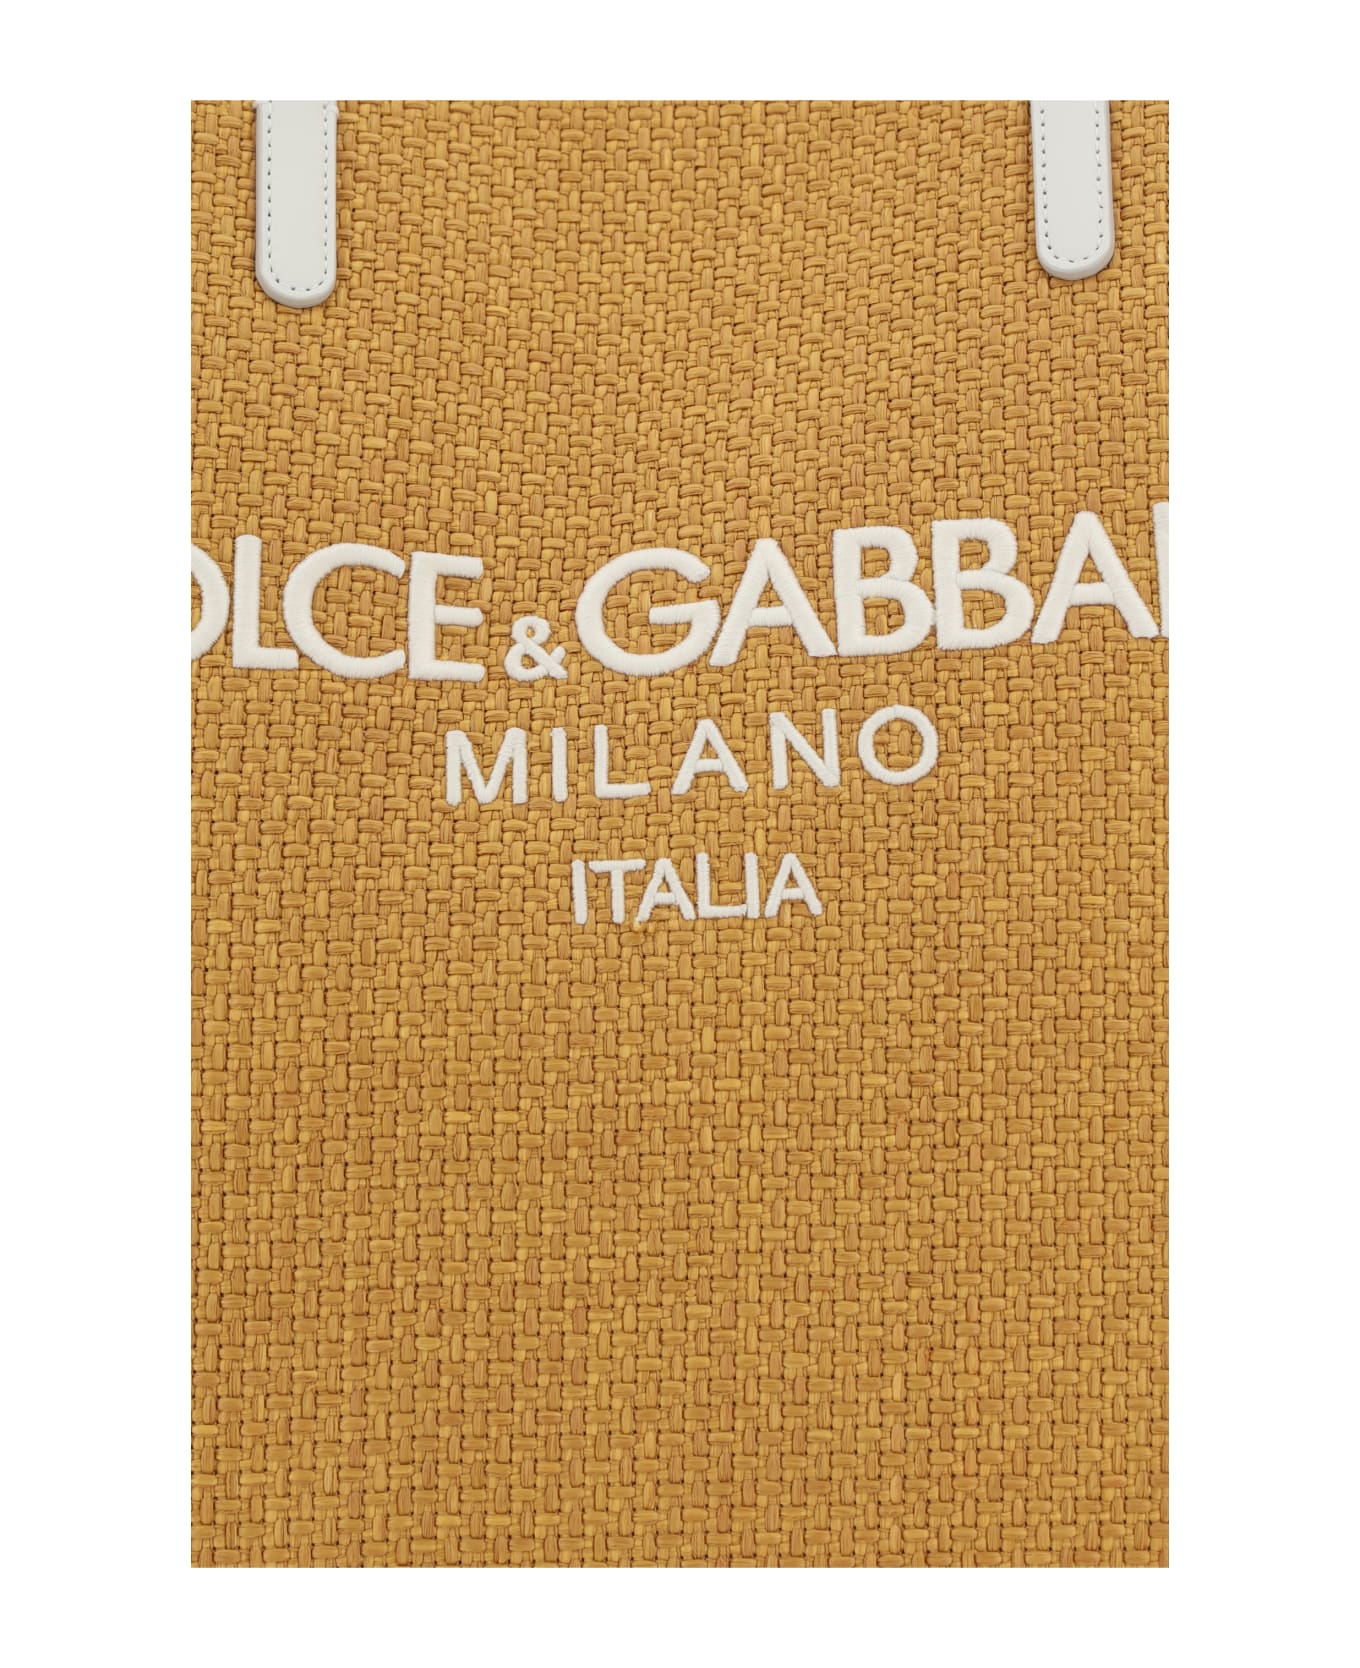 Dolce & Gabbana Shopping Shoulder Bag - Miele/latte